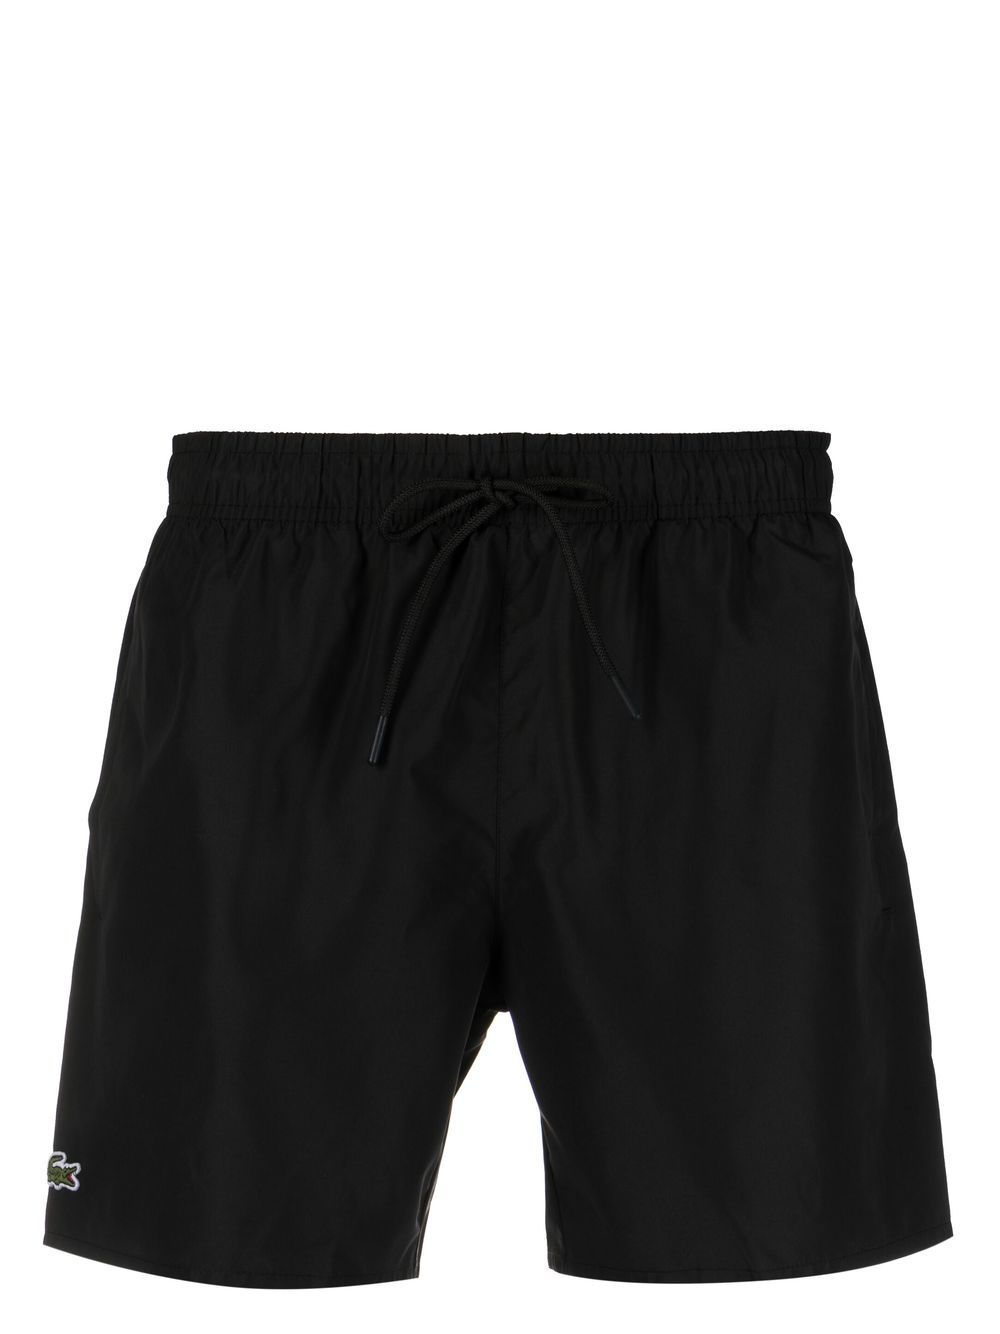 Embroidered-logo swim shorts<BR/><BR/><BR/>